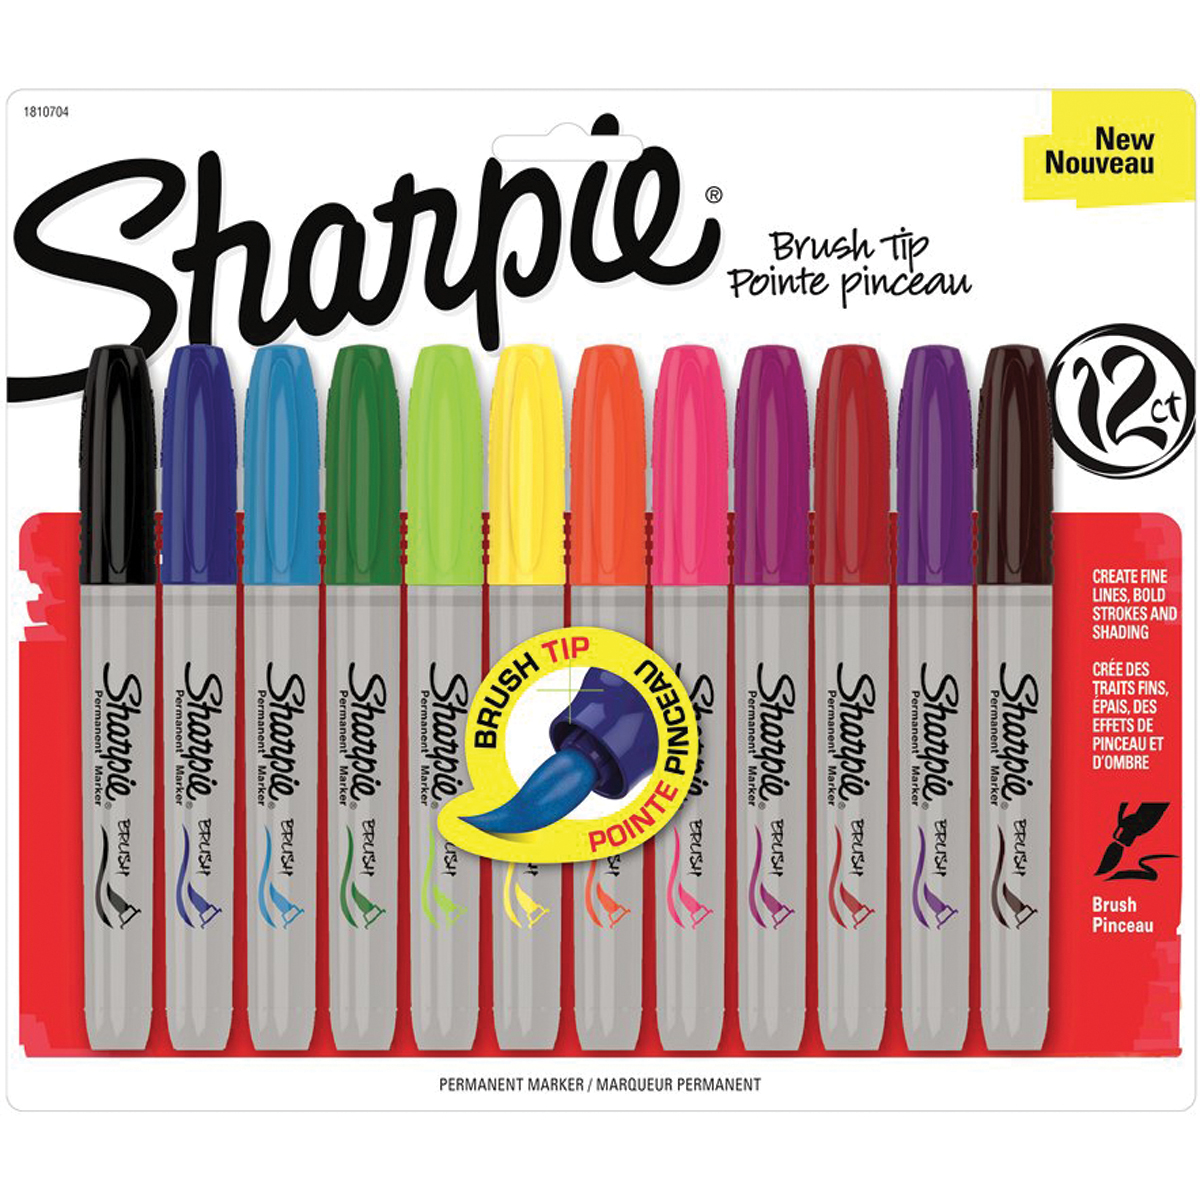 Sharpie Brush Tip Permanent Markers 12/Pkg-Assorted Colors, 1810704 ...